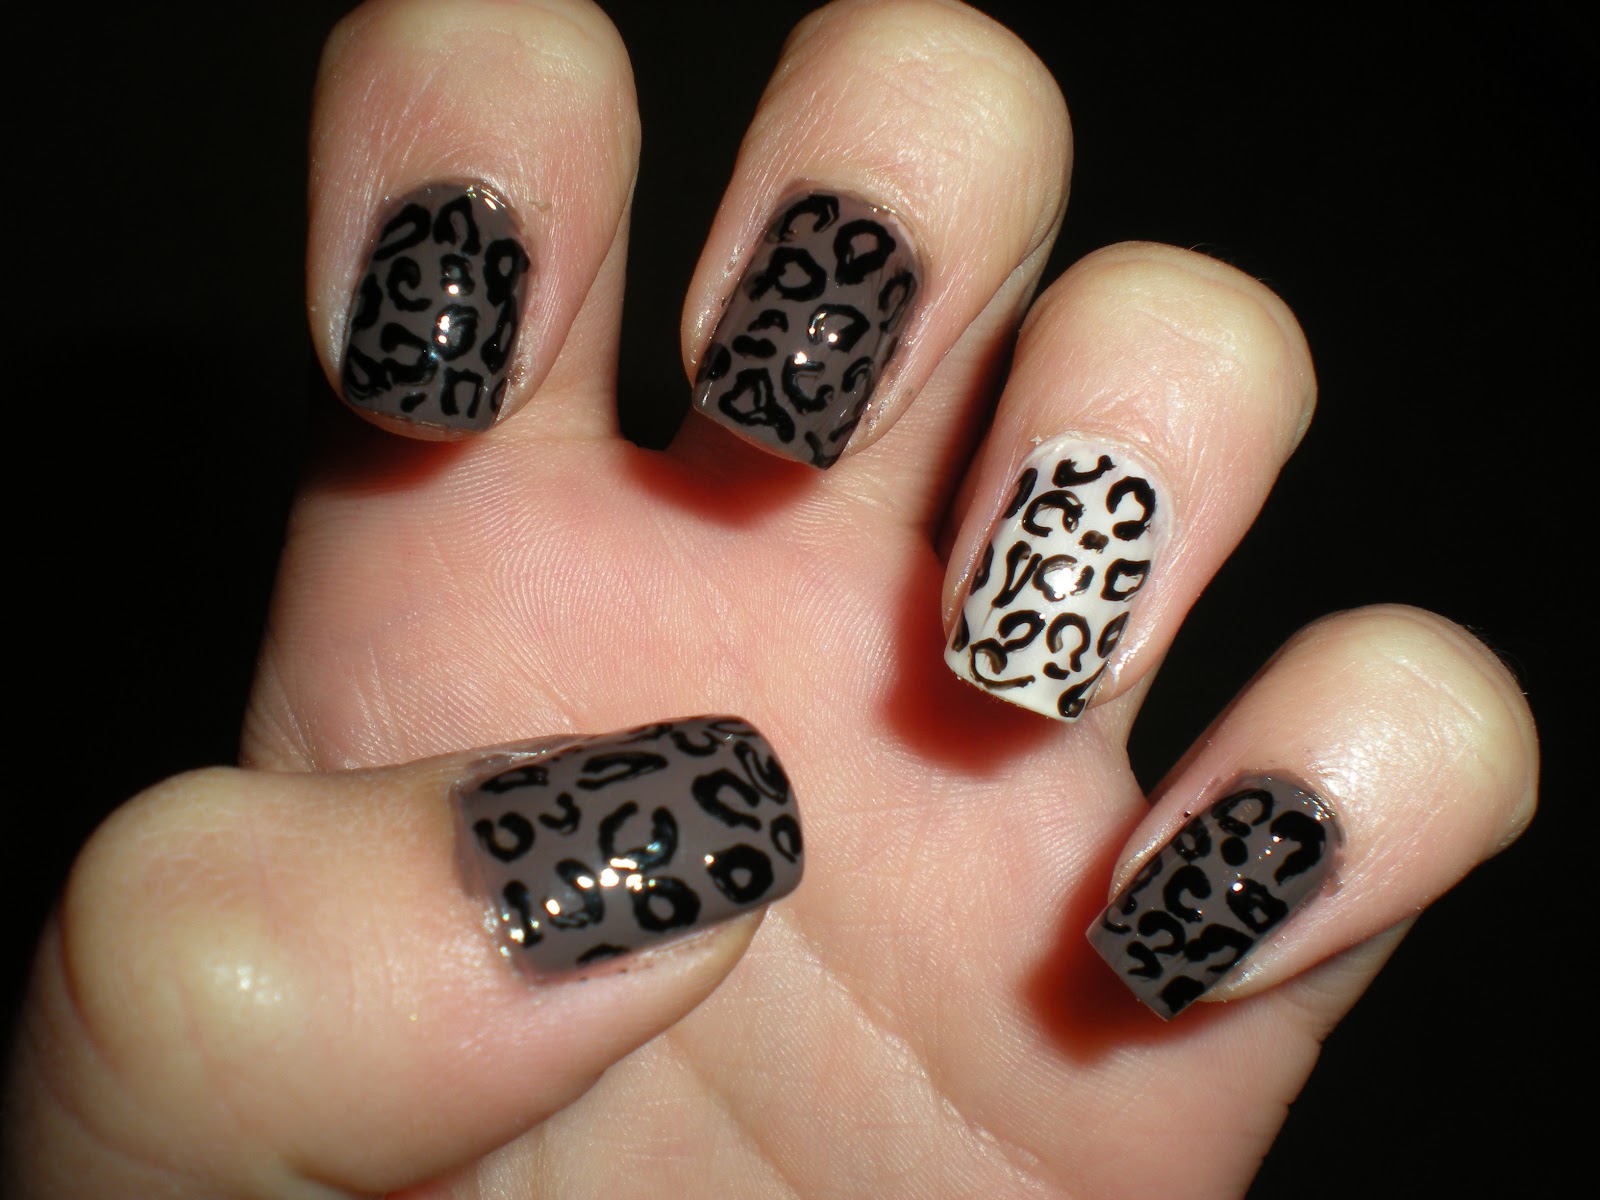 4. Cheetah Print Nail Designs for Long Nails on Pinterest - wide 1